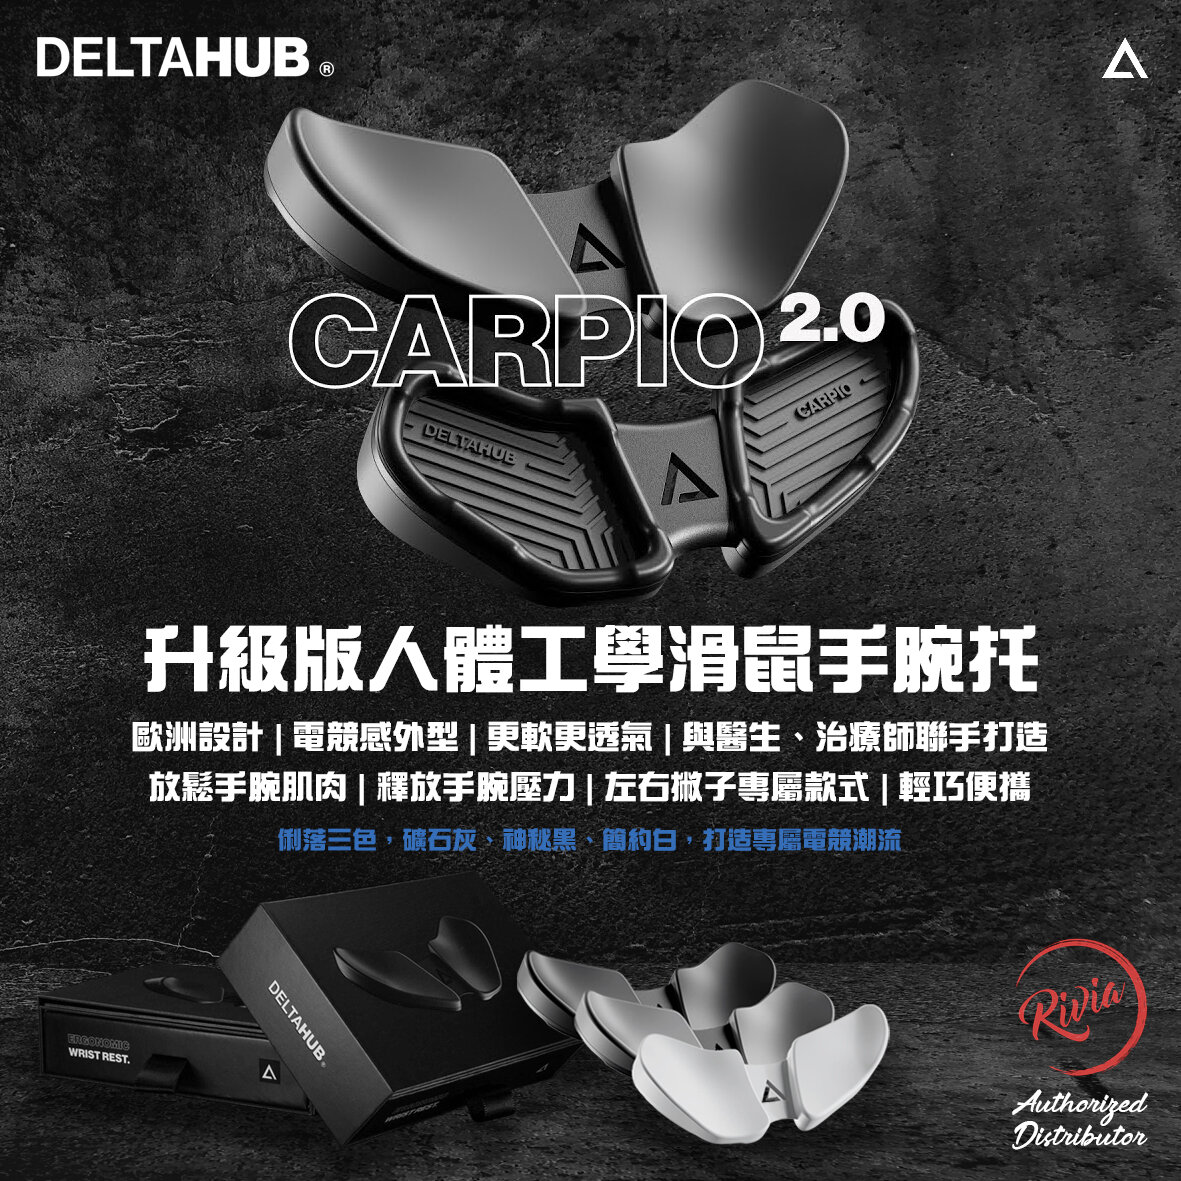 DELTAHUB, Carpio 2.0 Ergonomic Wrist Rest (S Size) - Left / Black, Color  : Black, Size : Left Hand, Small